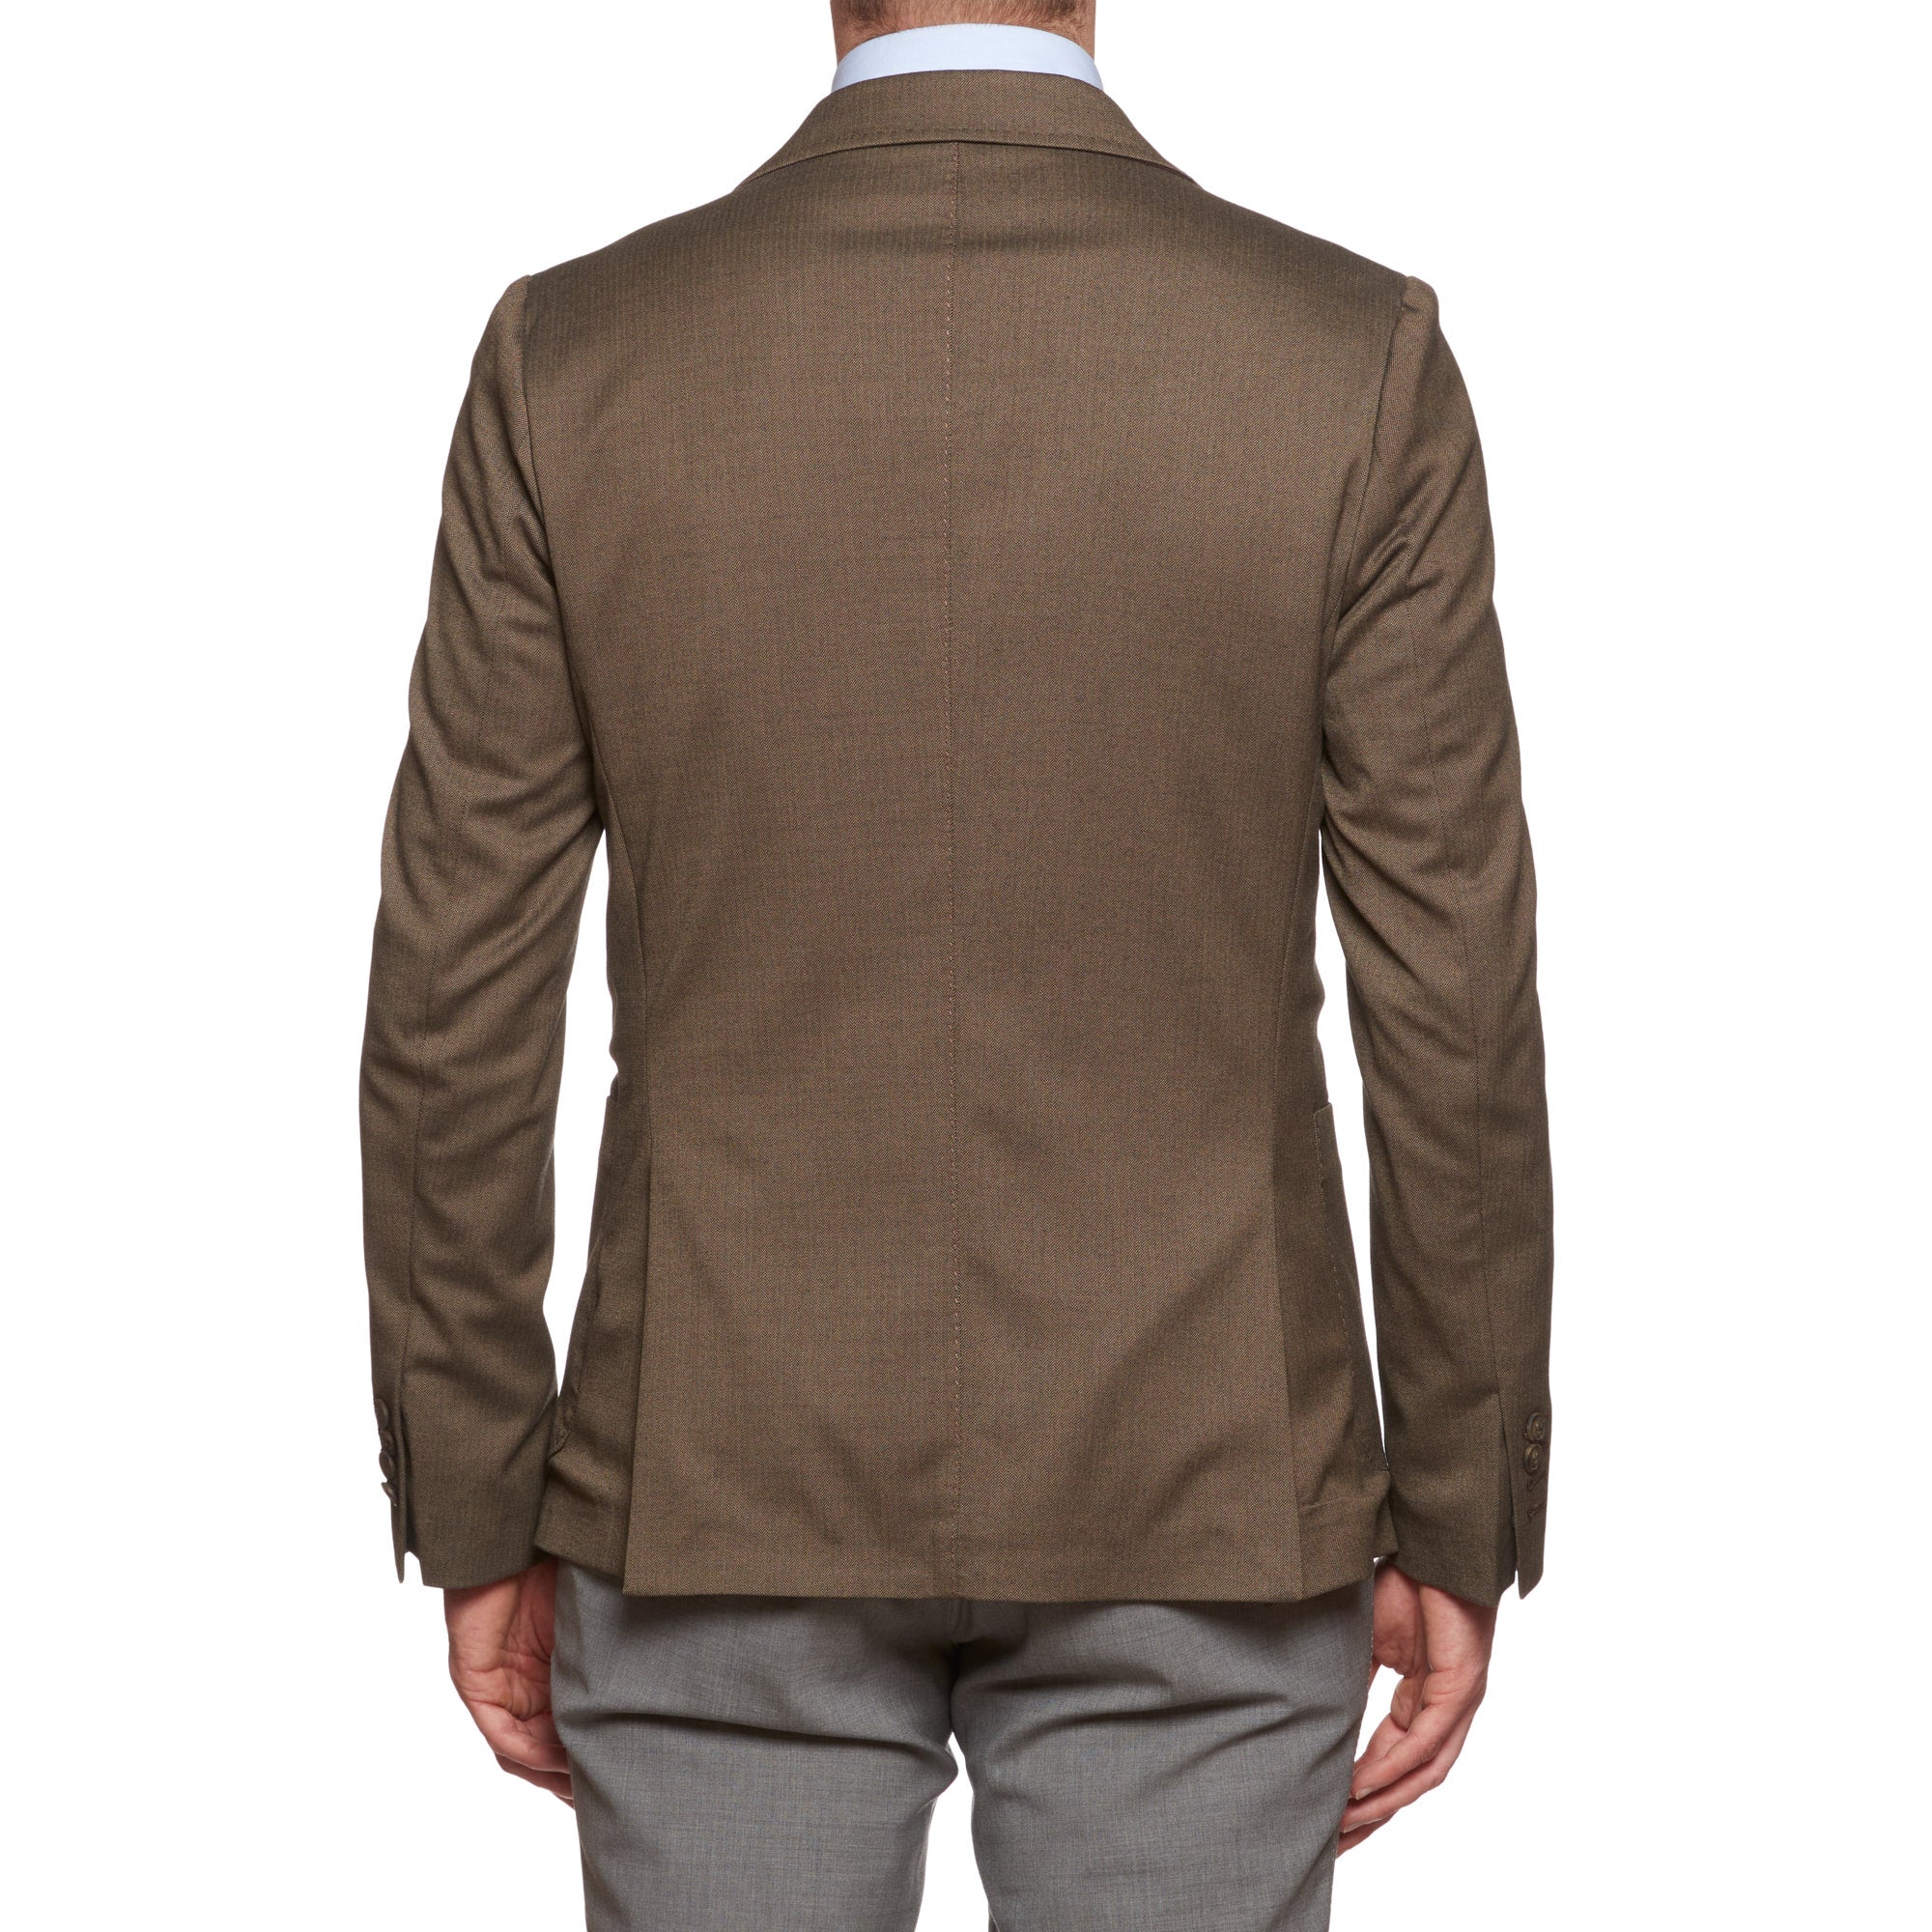 VINCENZO PALUMBO "Alfred" Tan Herringbone Wool Jacket EU 48 NEW US 36 Slim Fit VINCENZO PALUMBO